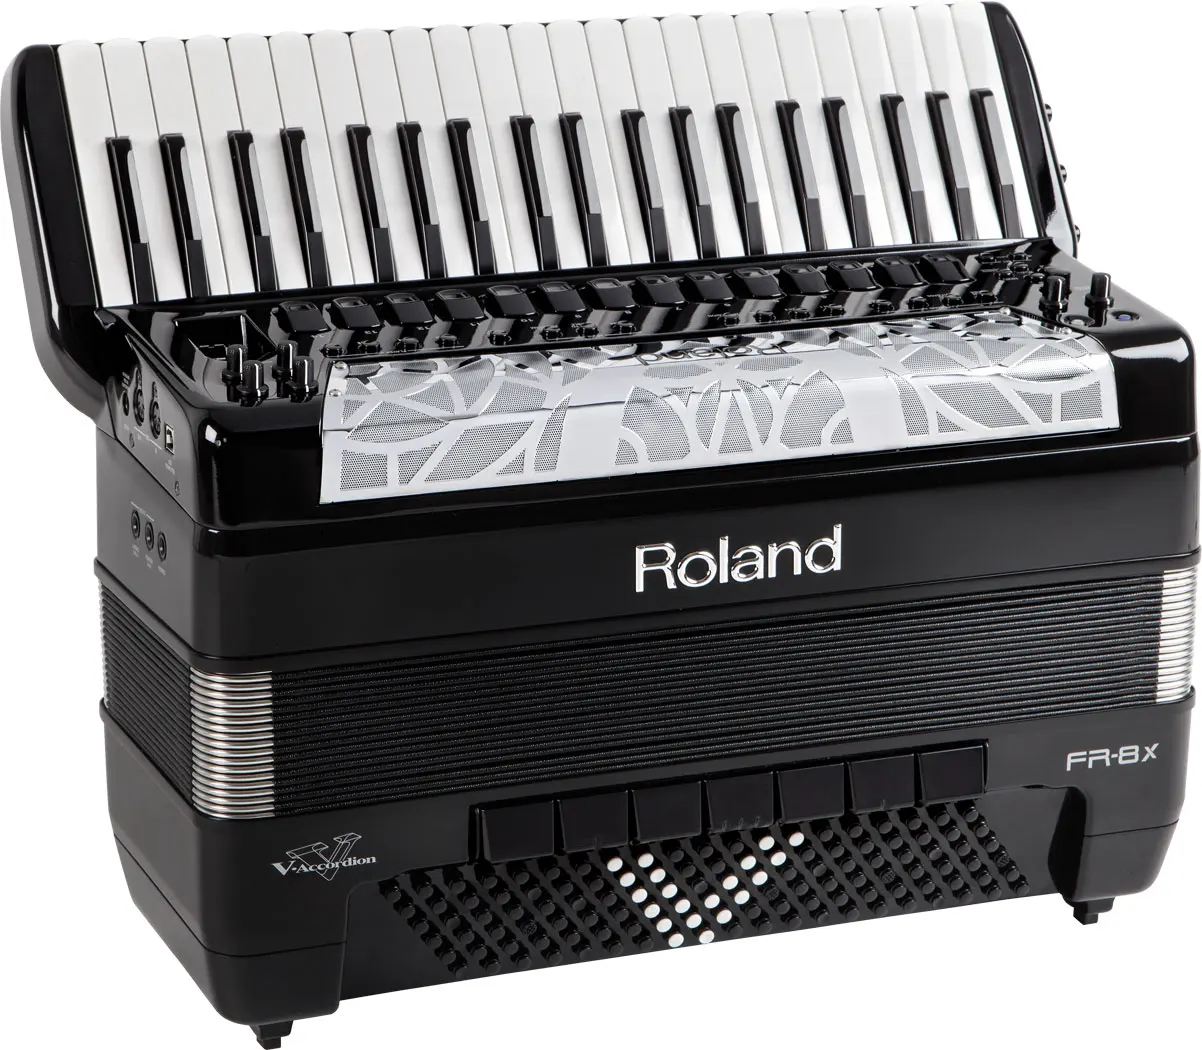 100% Best Quality Buy 2 Get 1 Free Roland v Accordions FR-8X